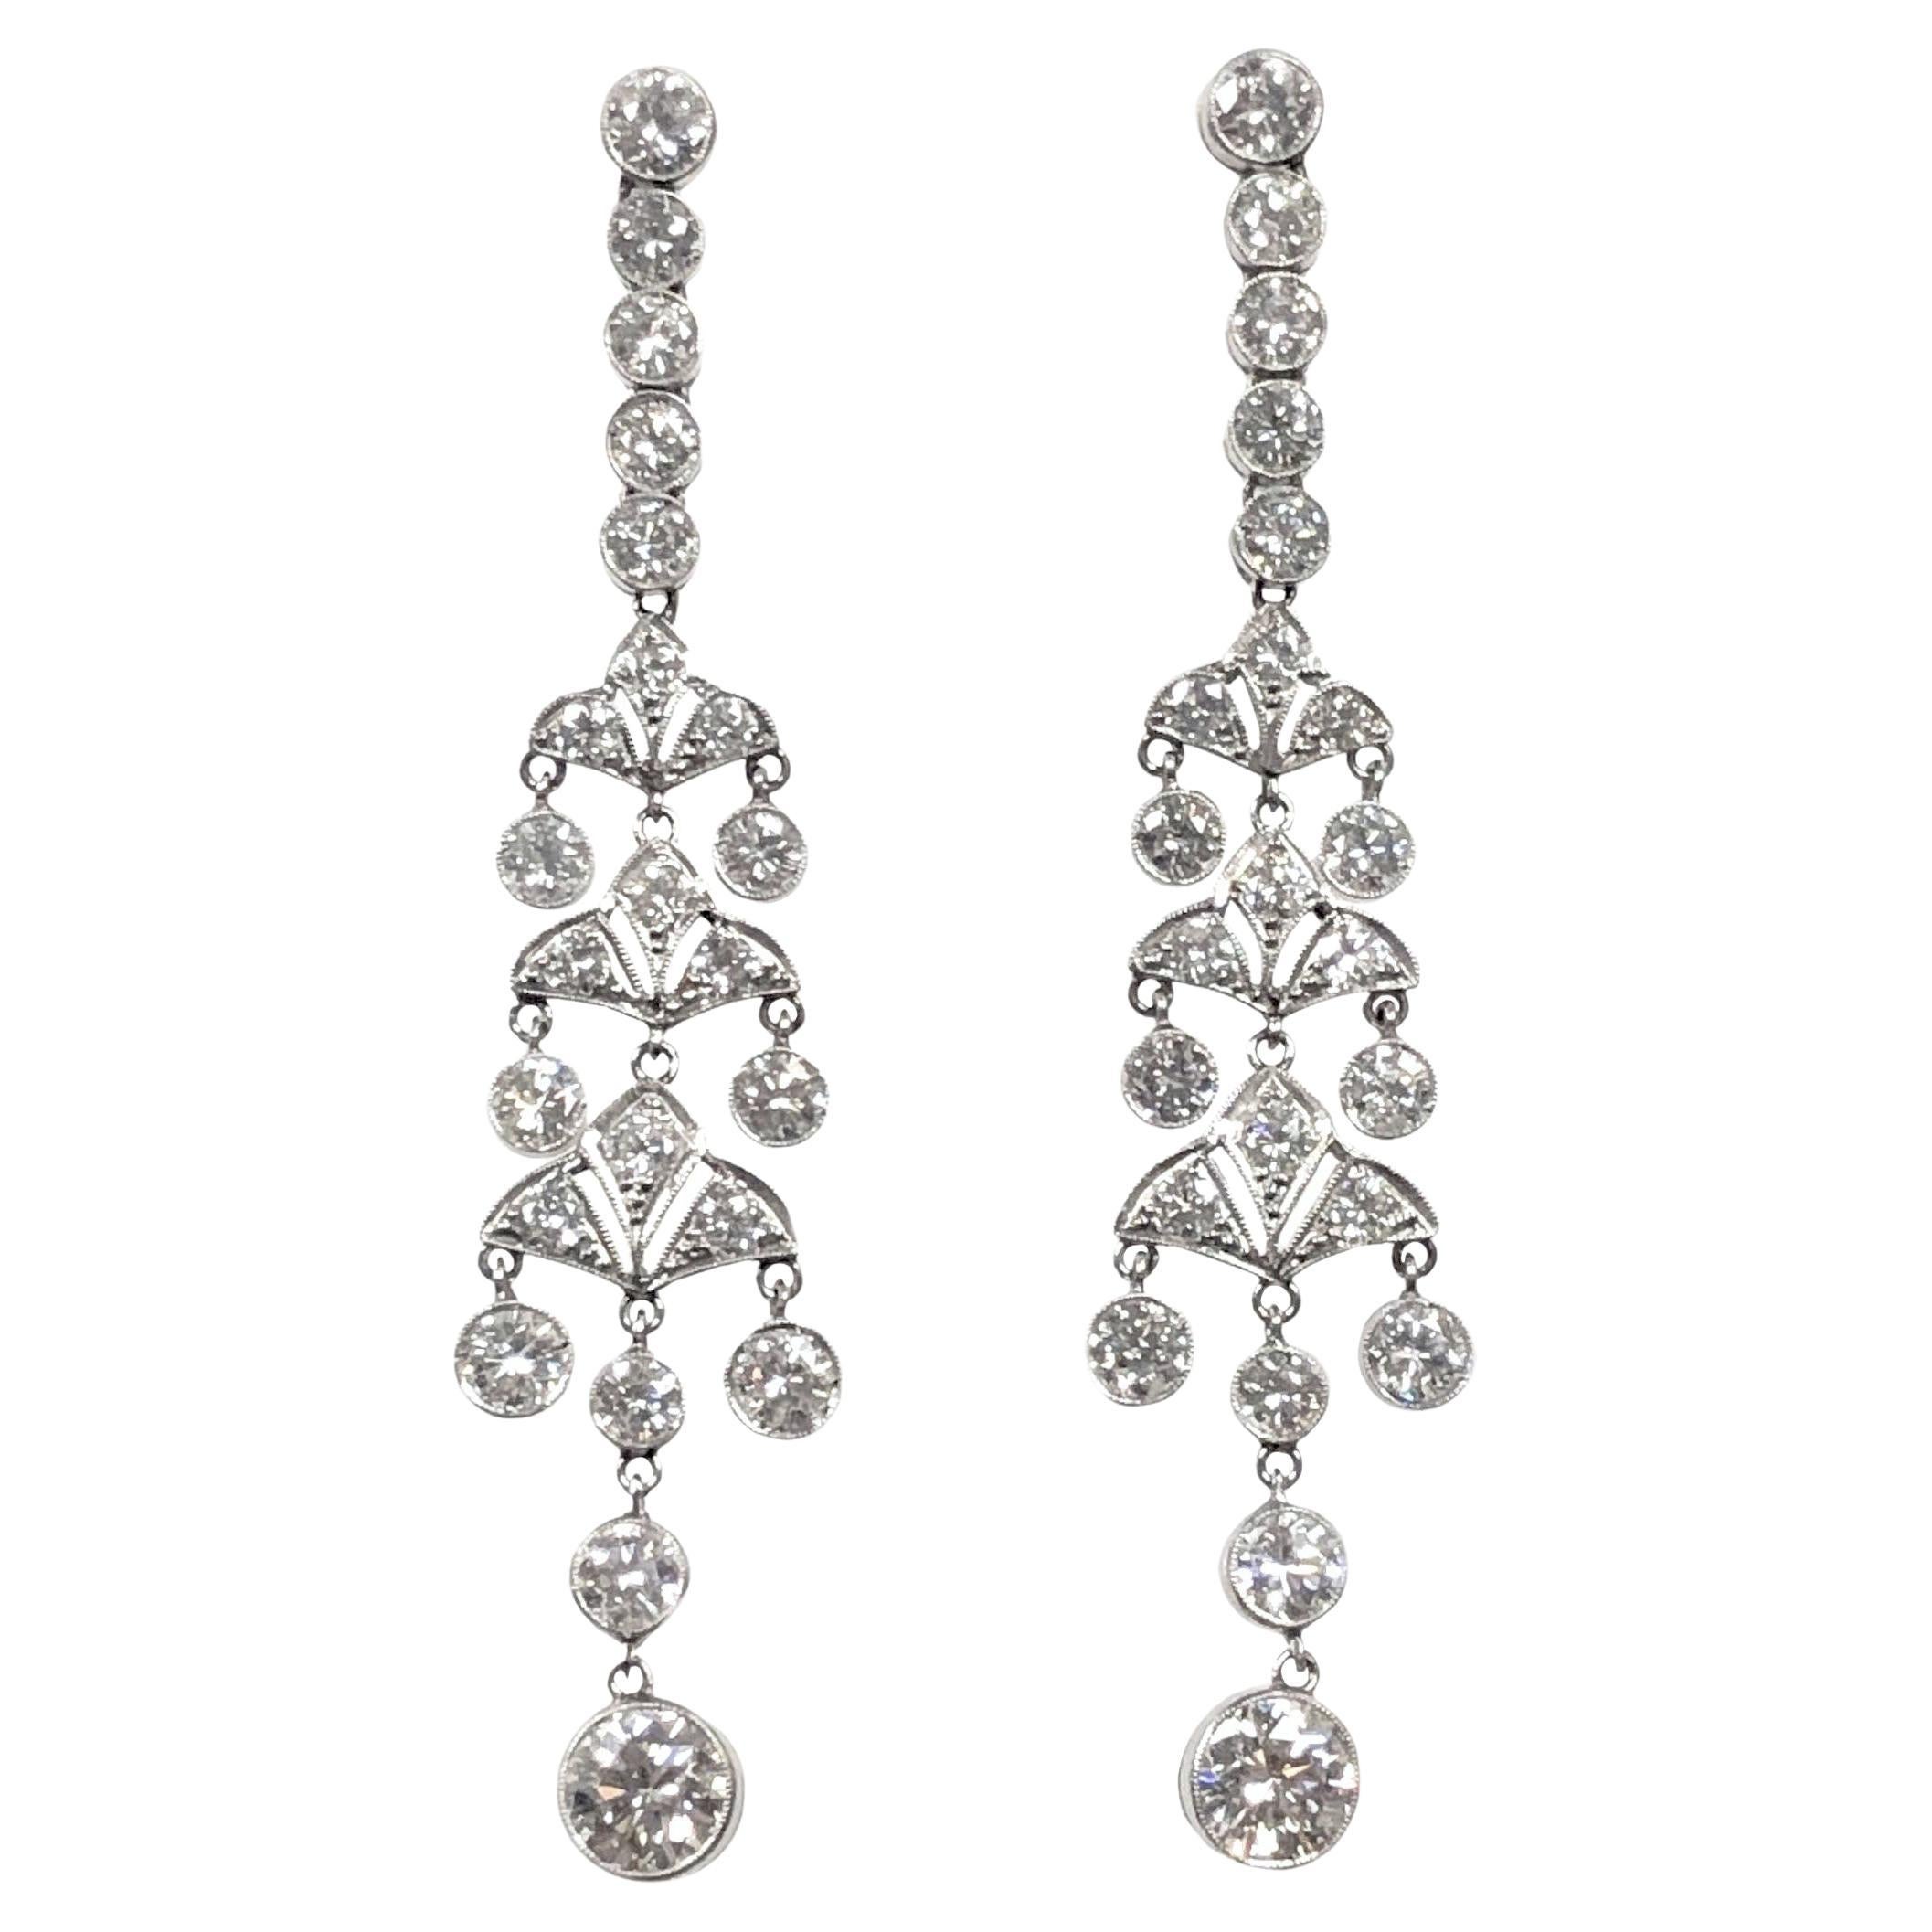 Edwardian Style Platinum and Diamond Chandelier Long Dangle Earrings